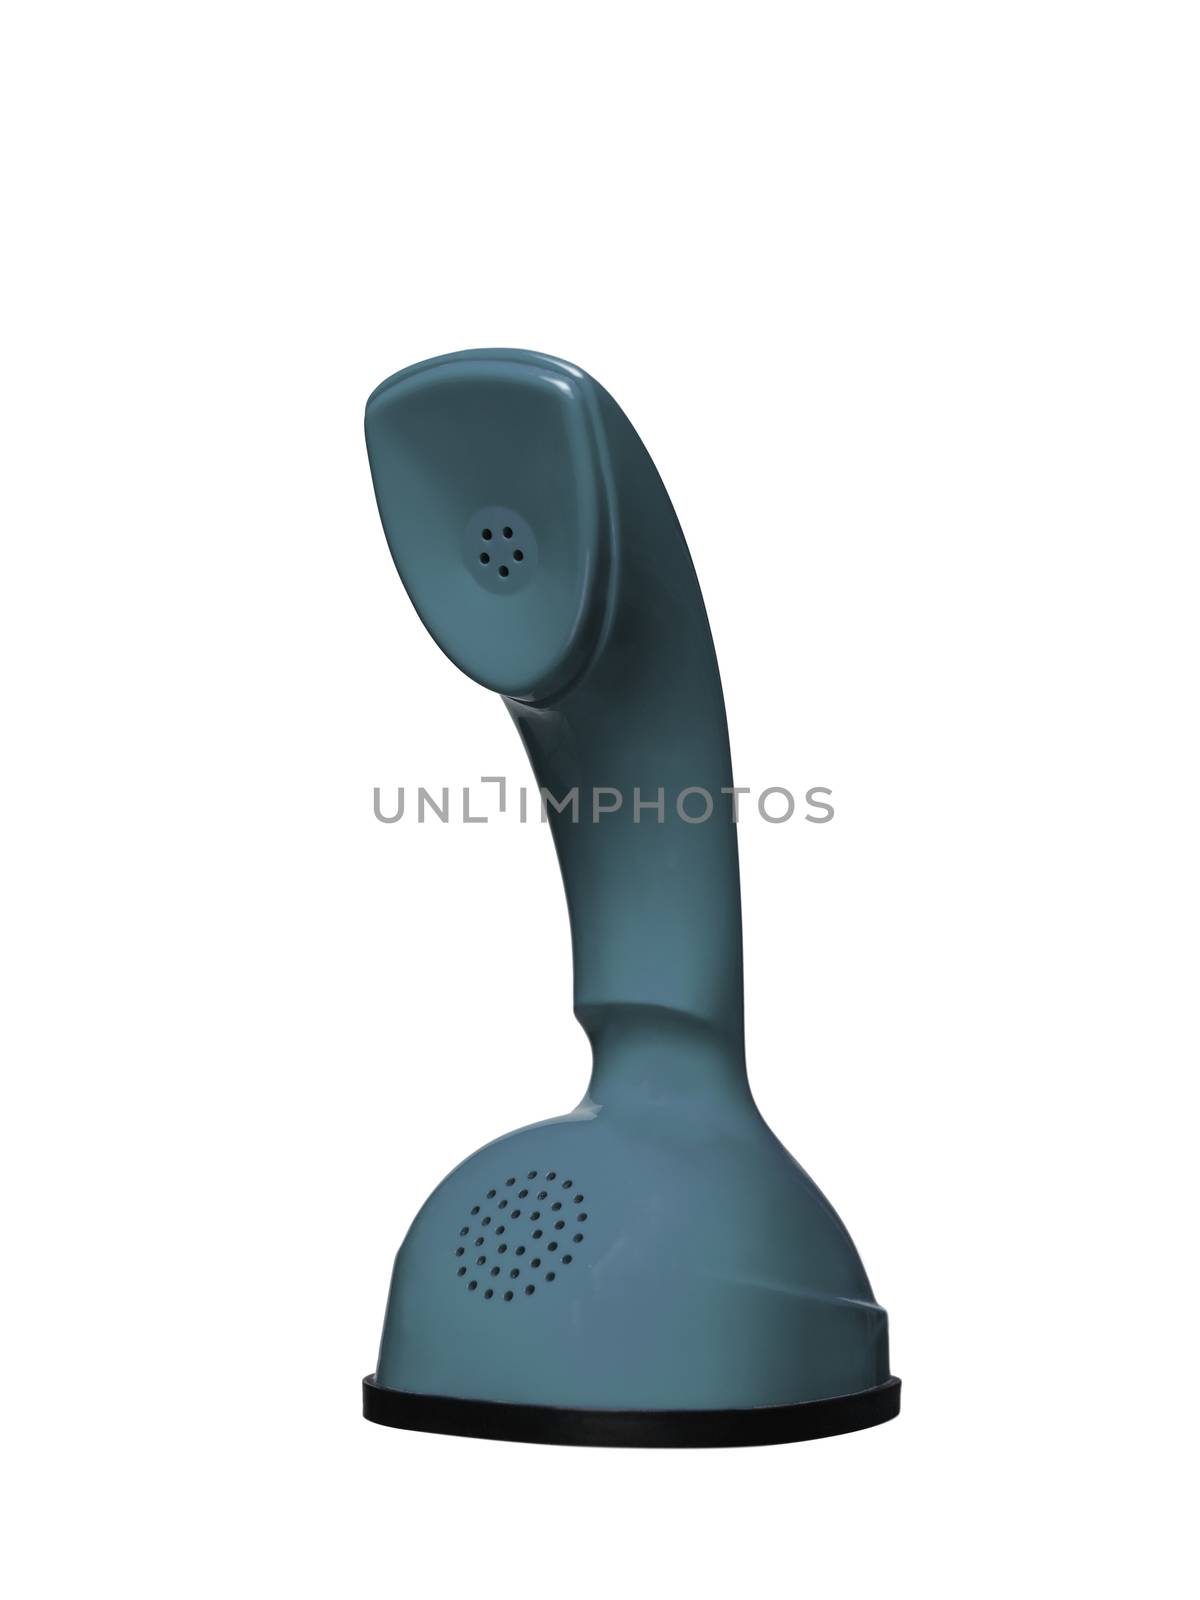 Grey Blue Cobra Telephone by gemenacom